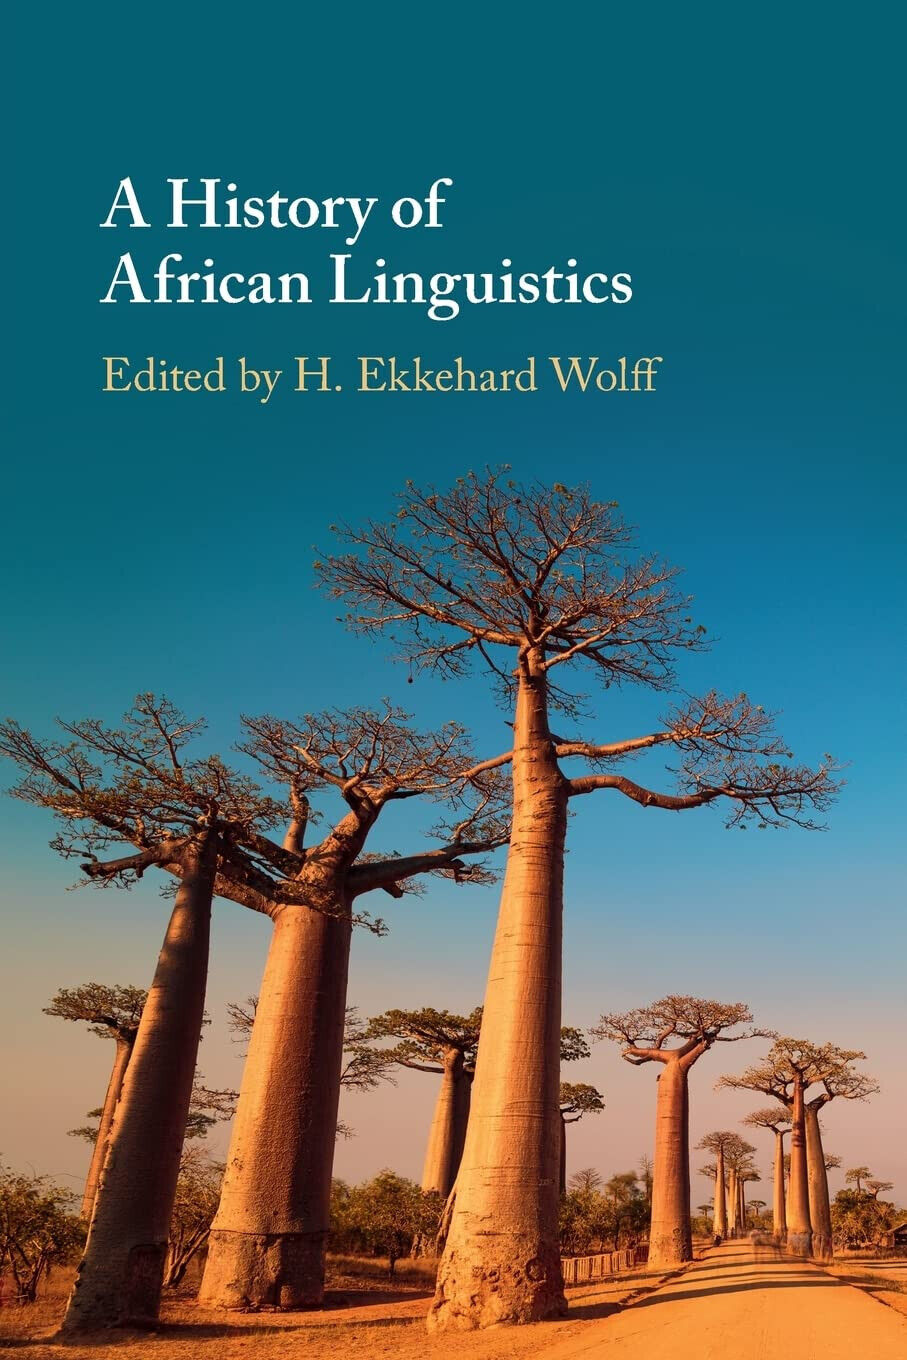 A History Of African Linguistics - H. Ekkehard Wolff - Cambridge, 2021